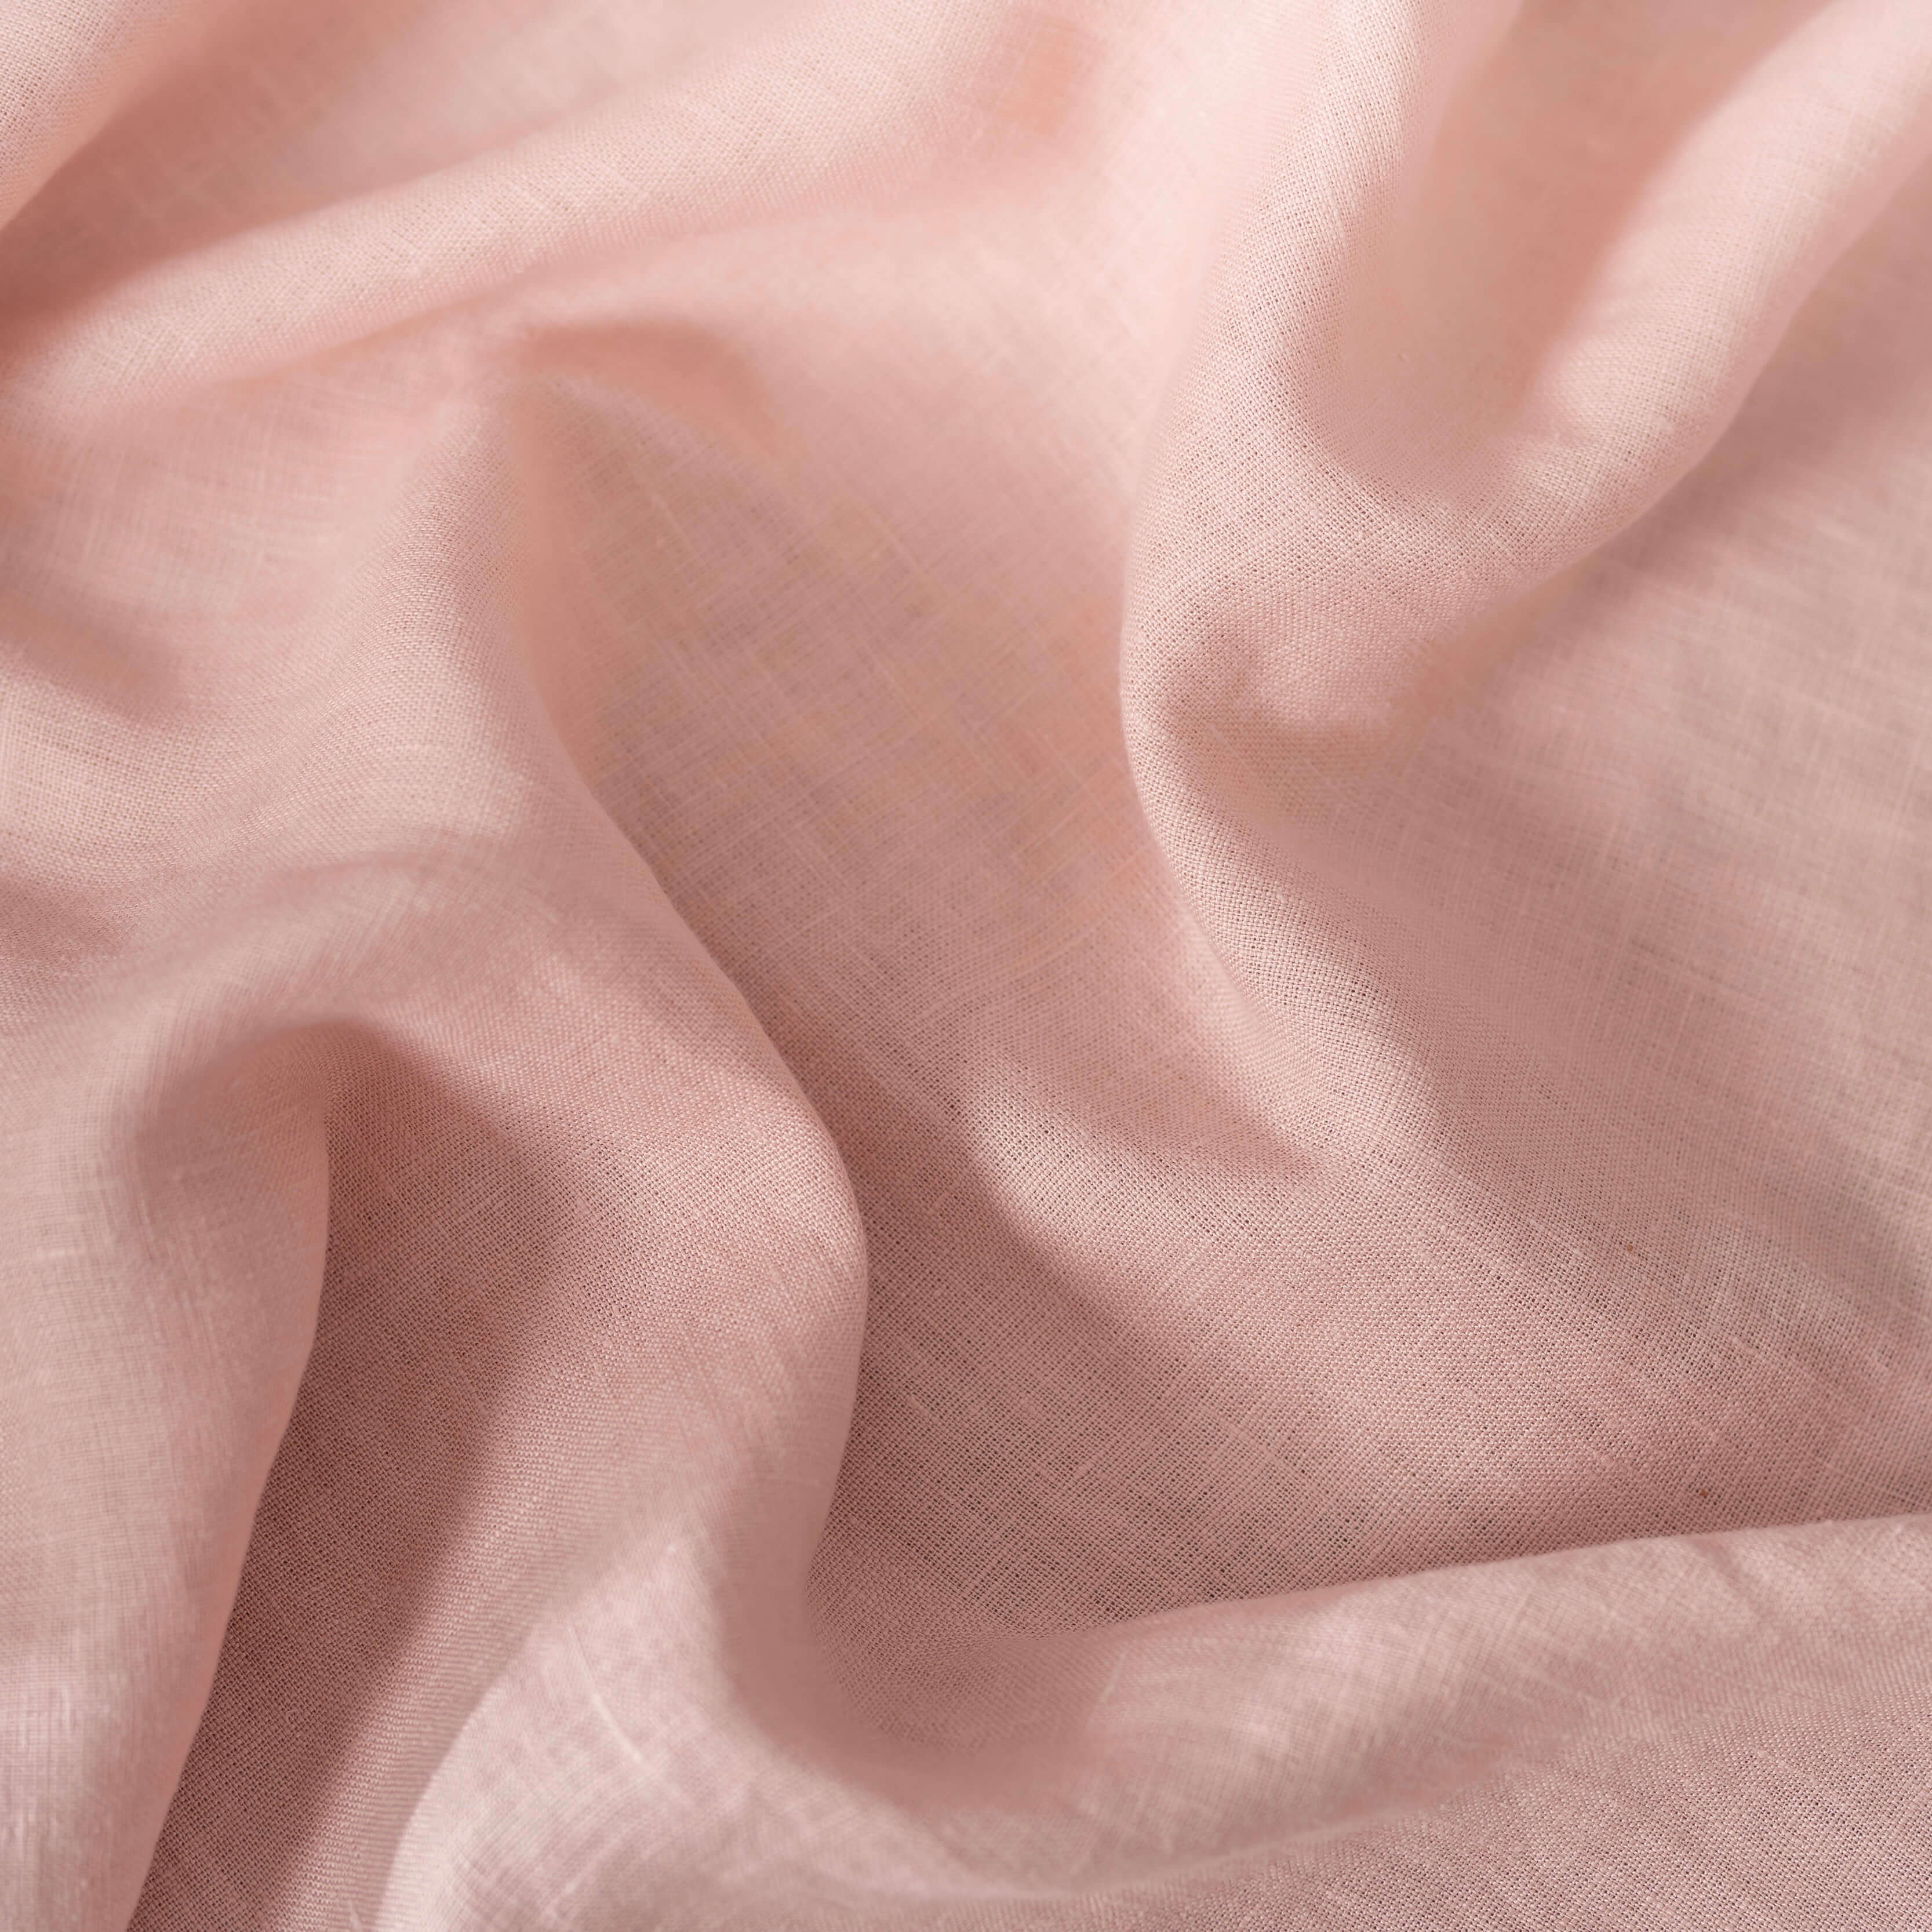 Washed Pure Blush Pink Linen Fabric 205 g/m²